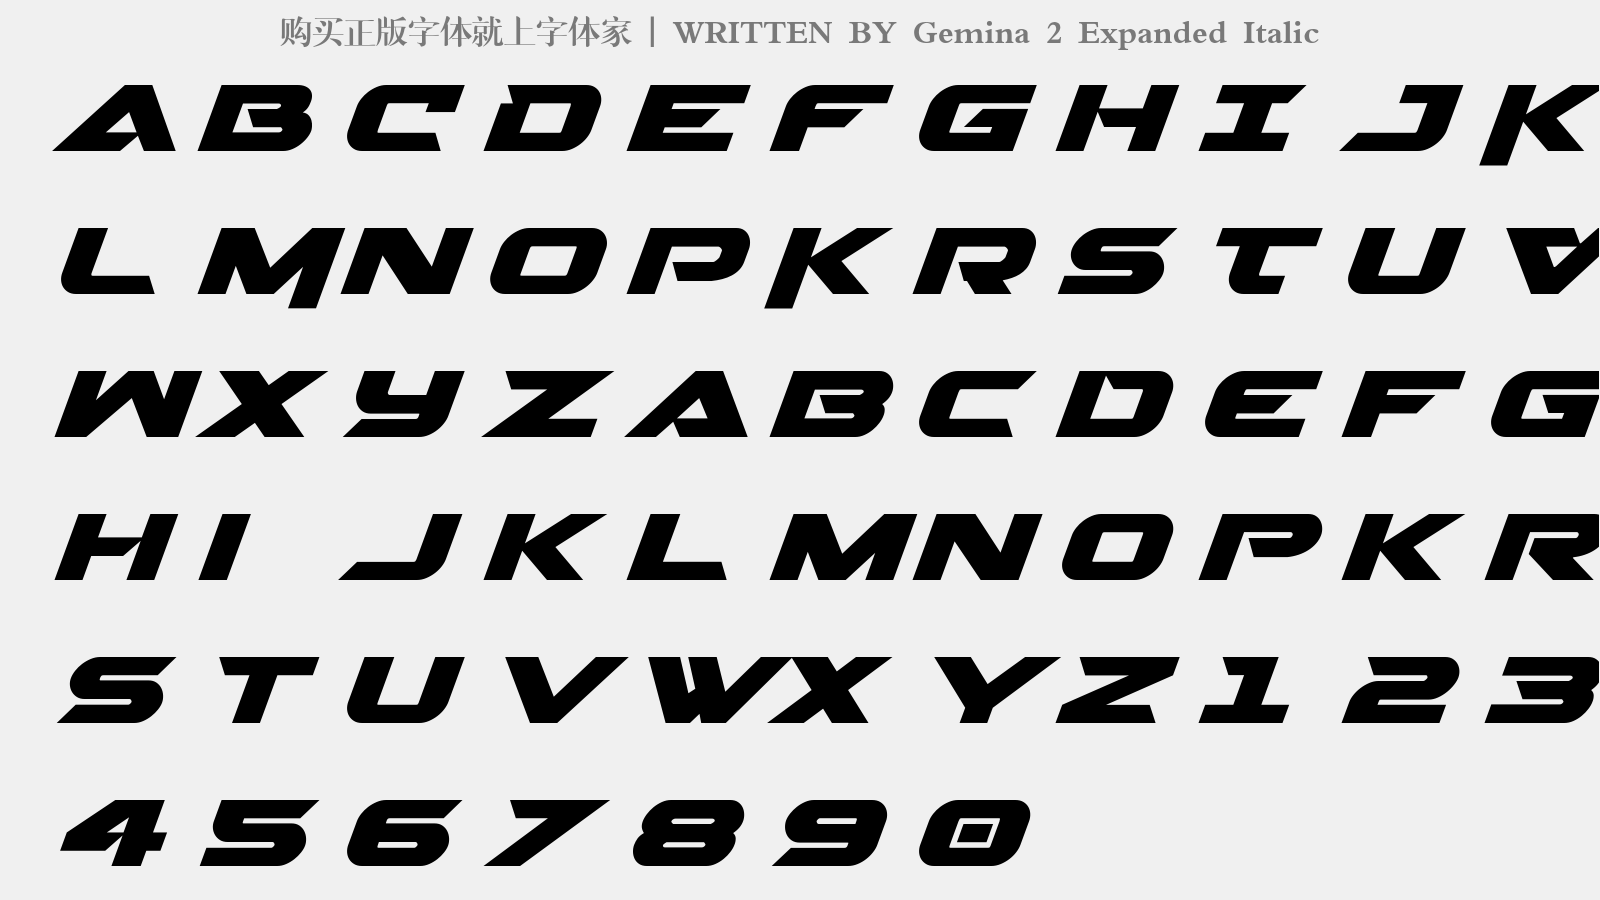 Gemina 2 Expanded Italic - 大写字母/小写字母/数字